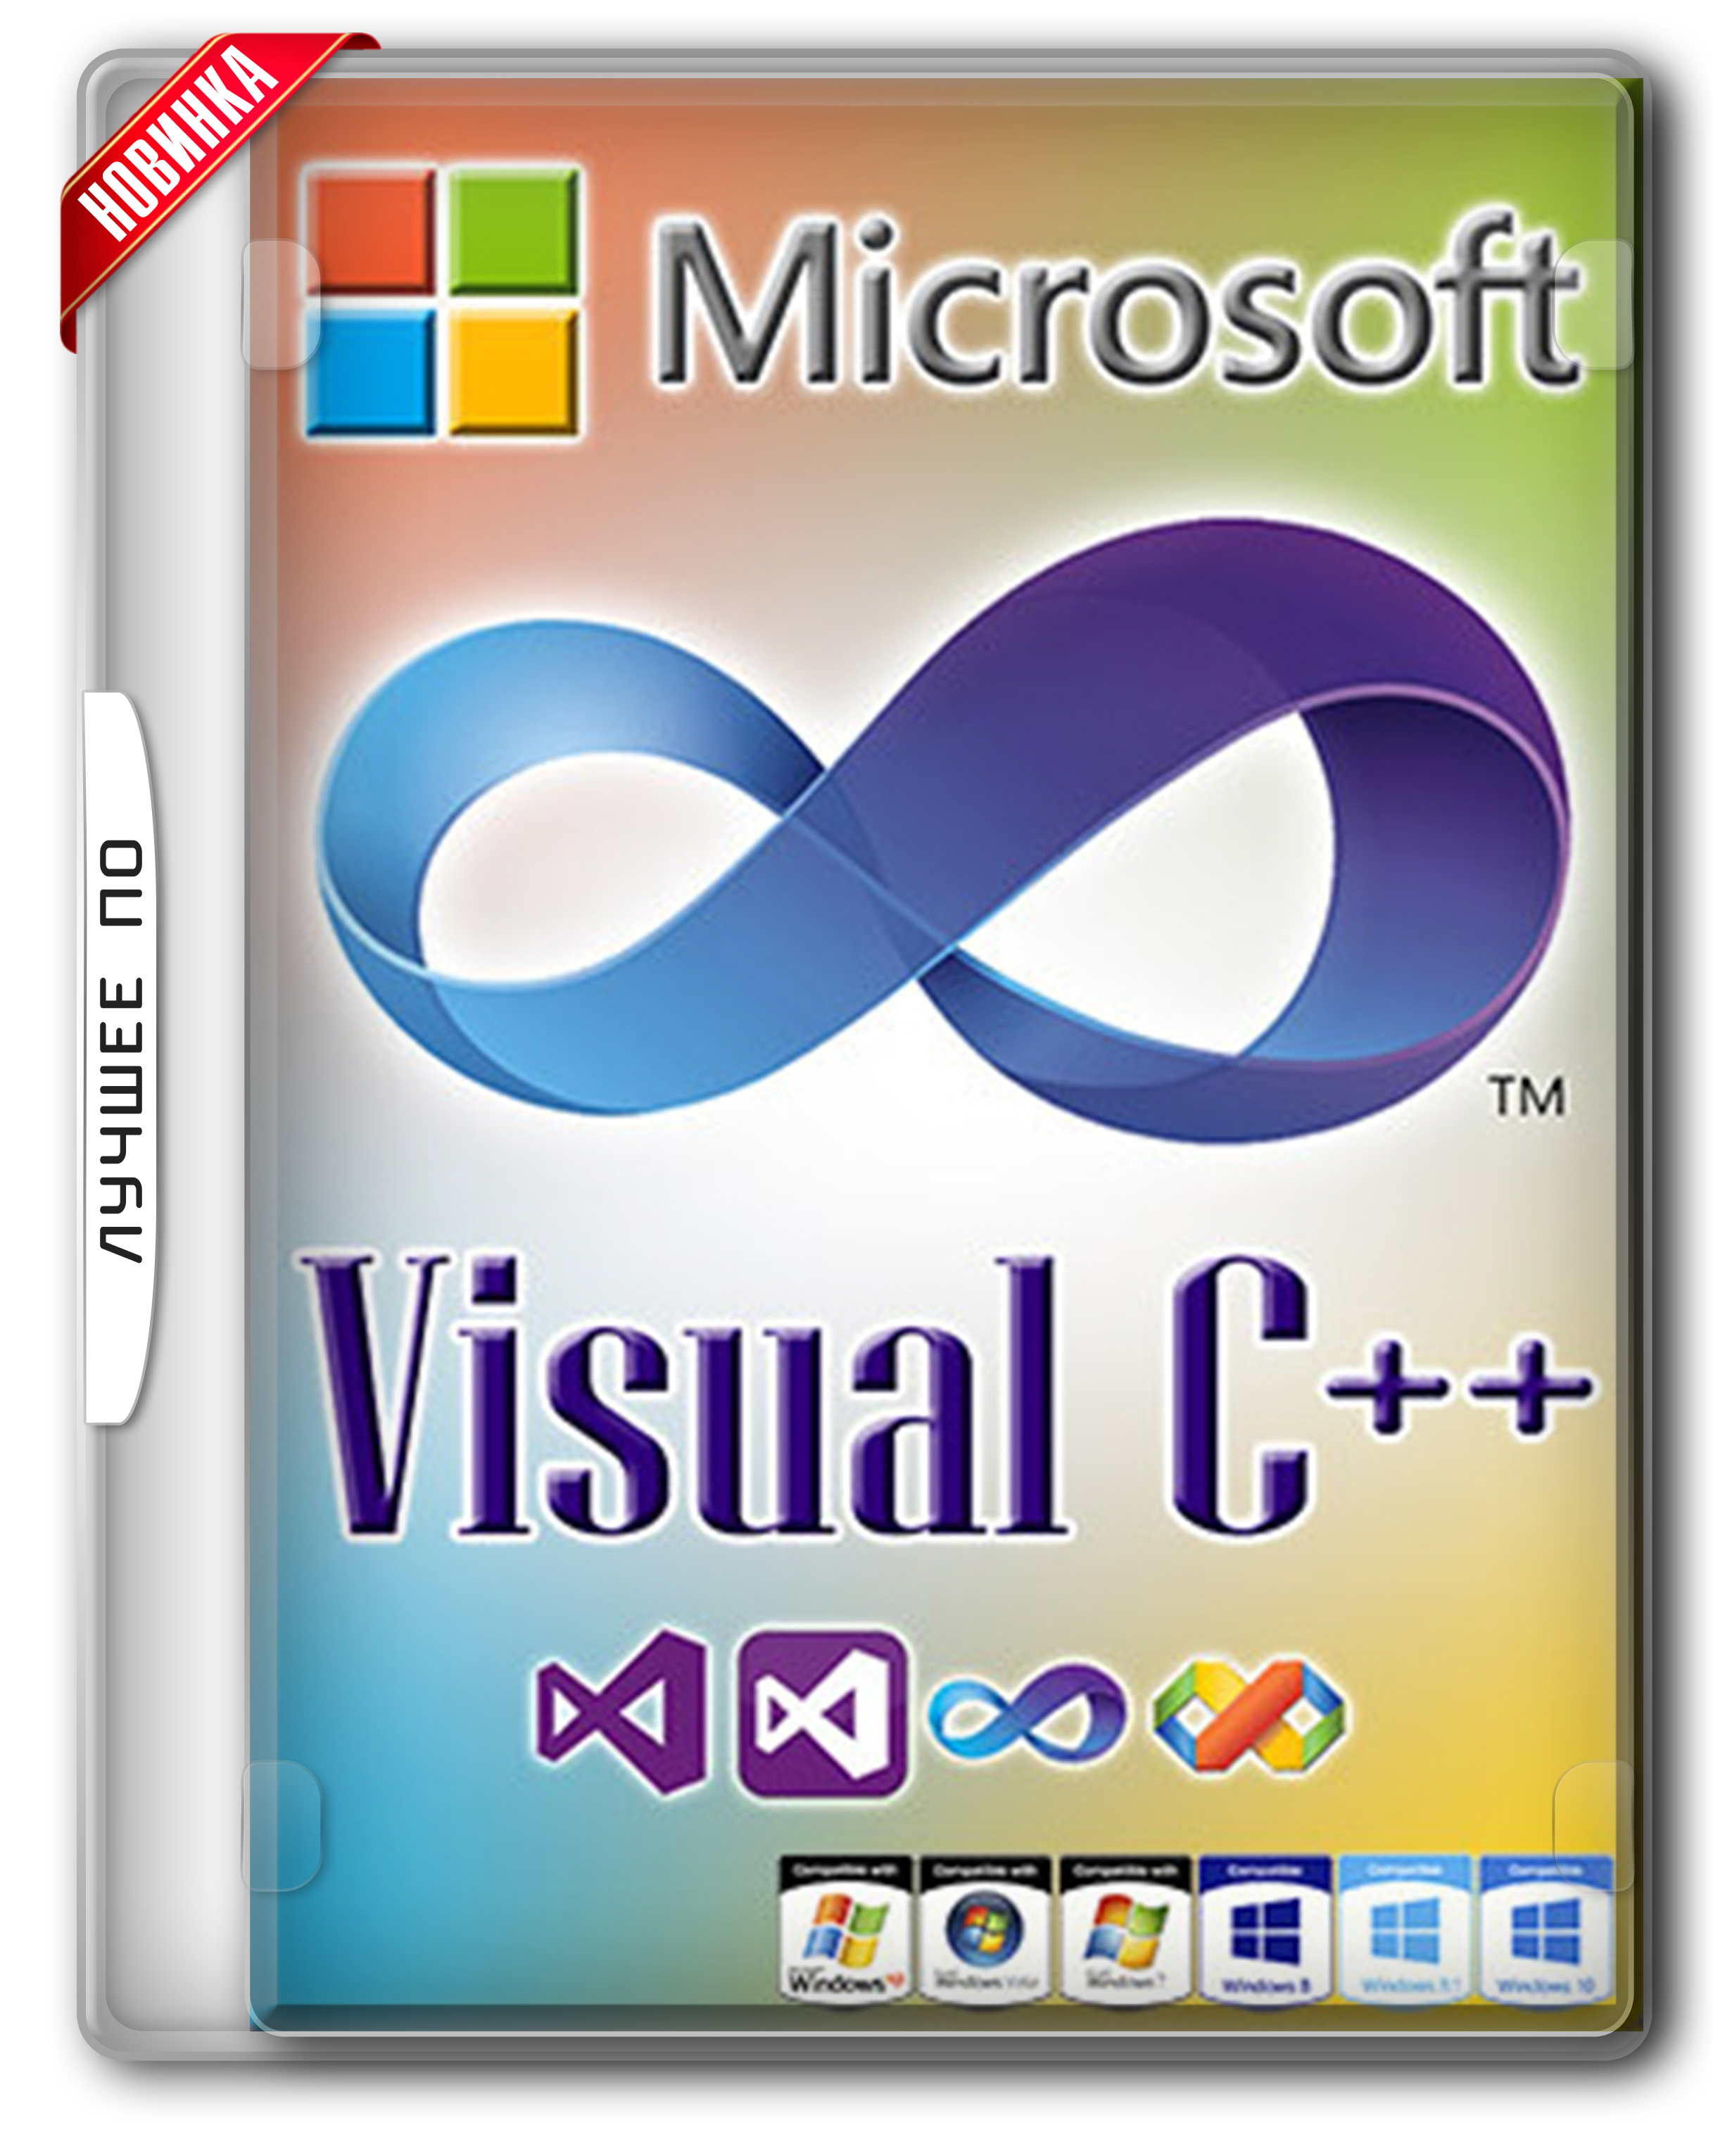 C redistributable 2017. Microsoft Visual c++ 2015-2019. Microsoft Visual c++ 2019 x64 14.27.29016. Microsoft Visual c++ 2005. Визуал c++.